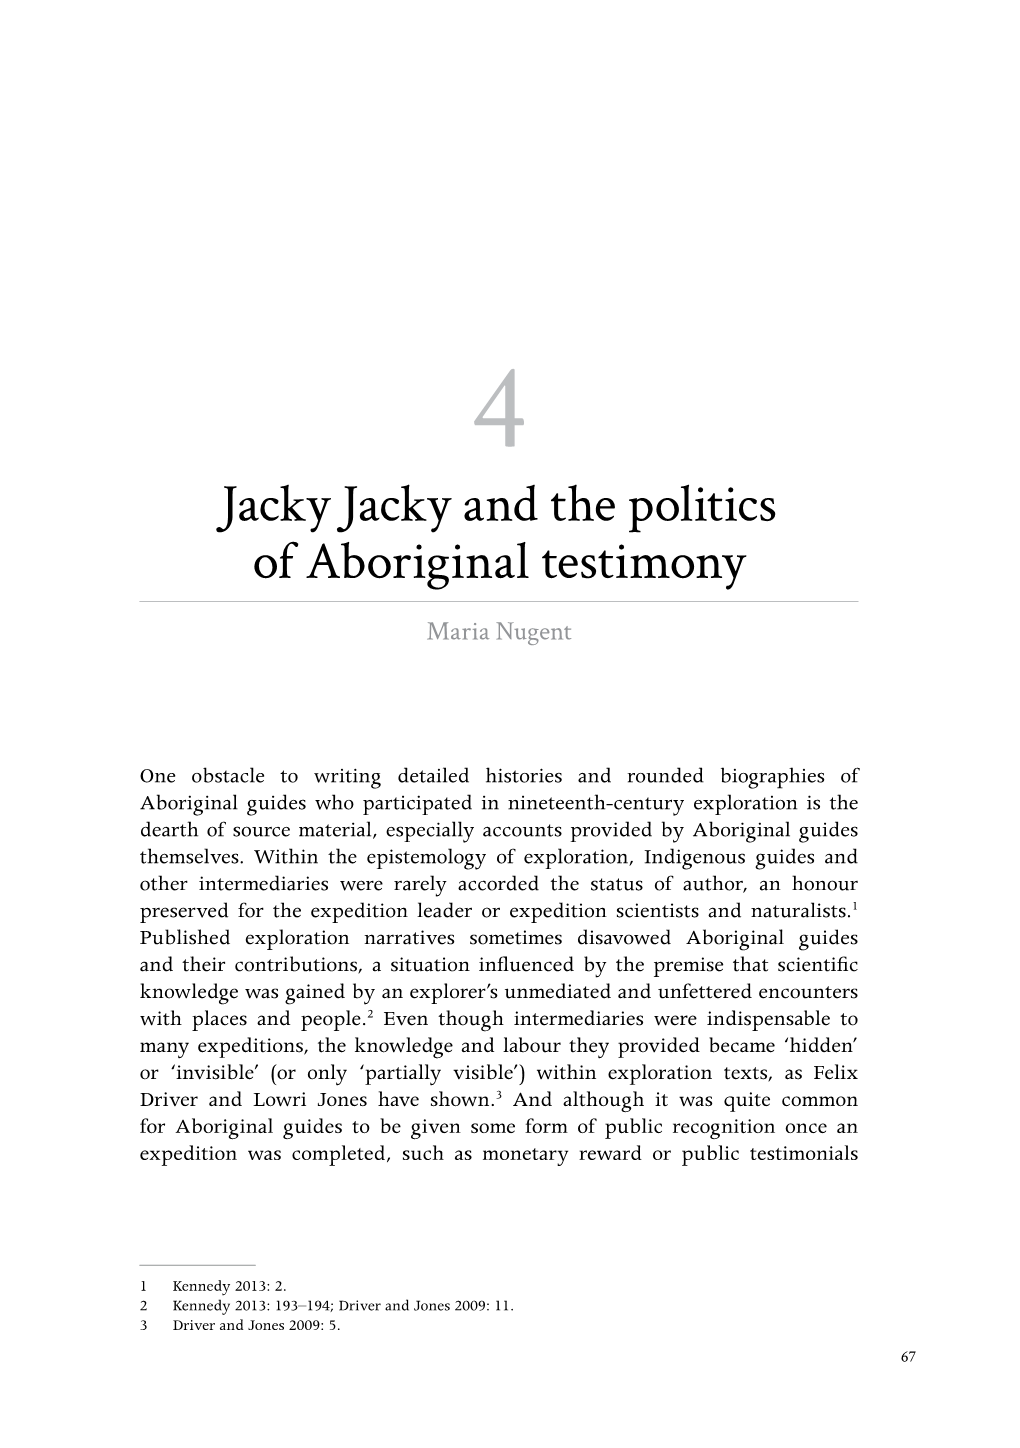 Jacky Jacky and the Politics of Aboriginal Testimony